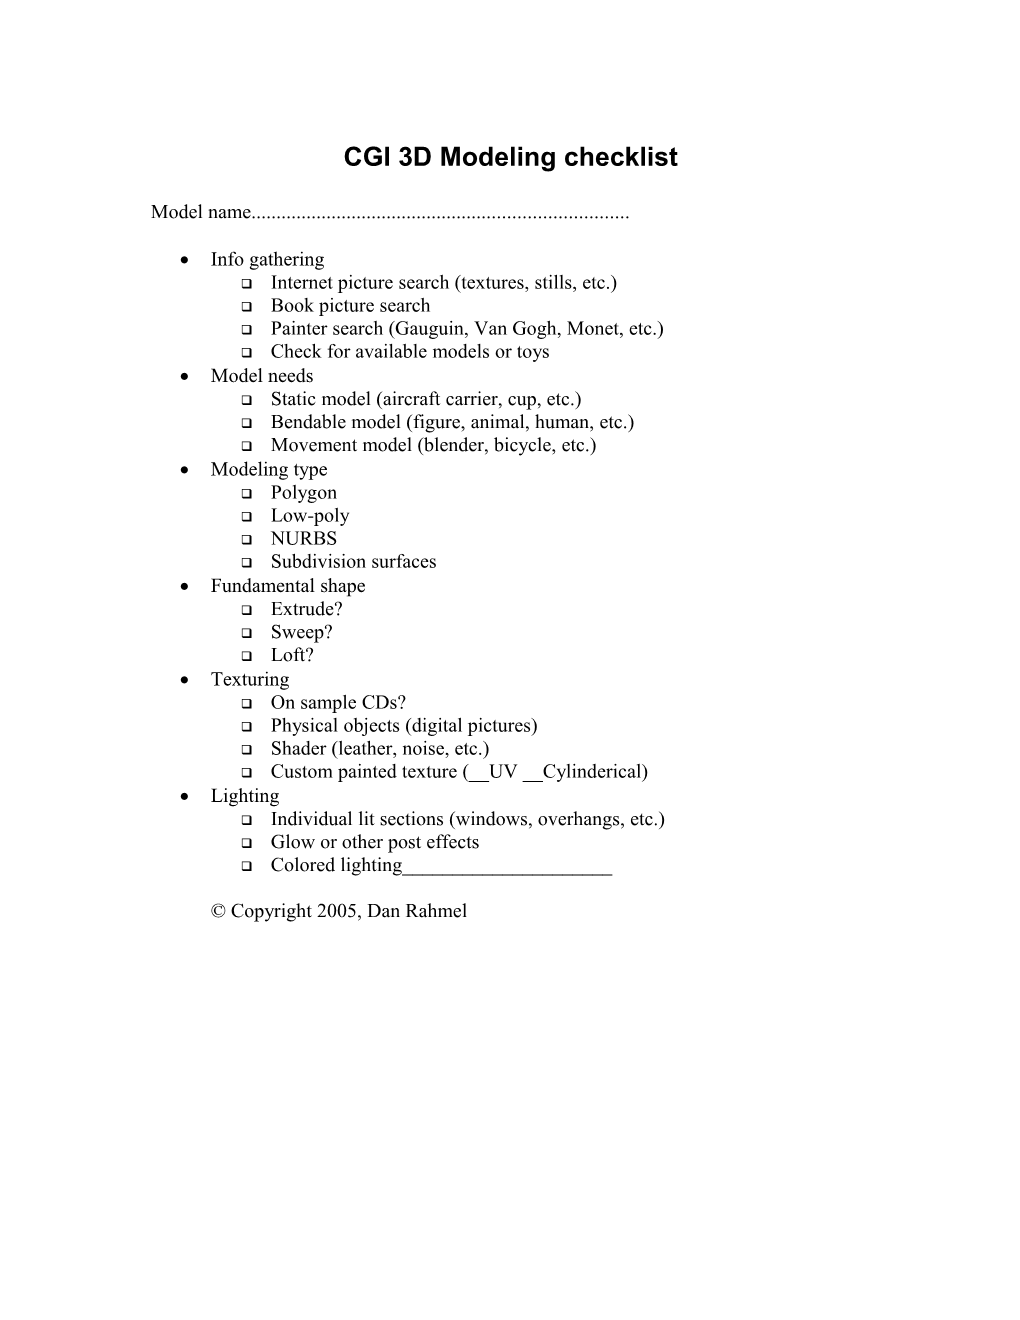 CGI Modeling Checklist